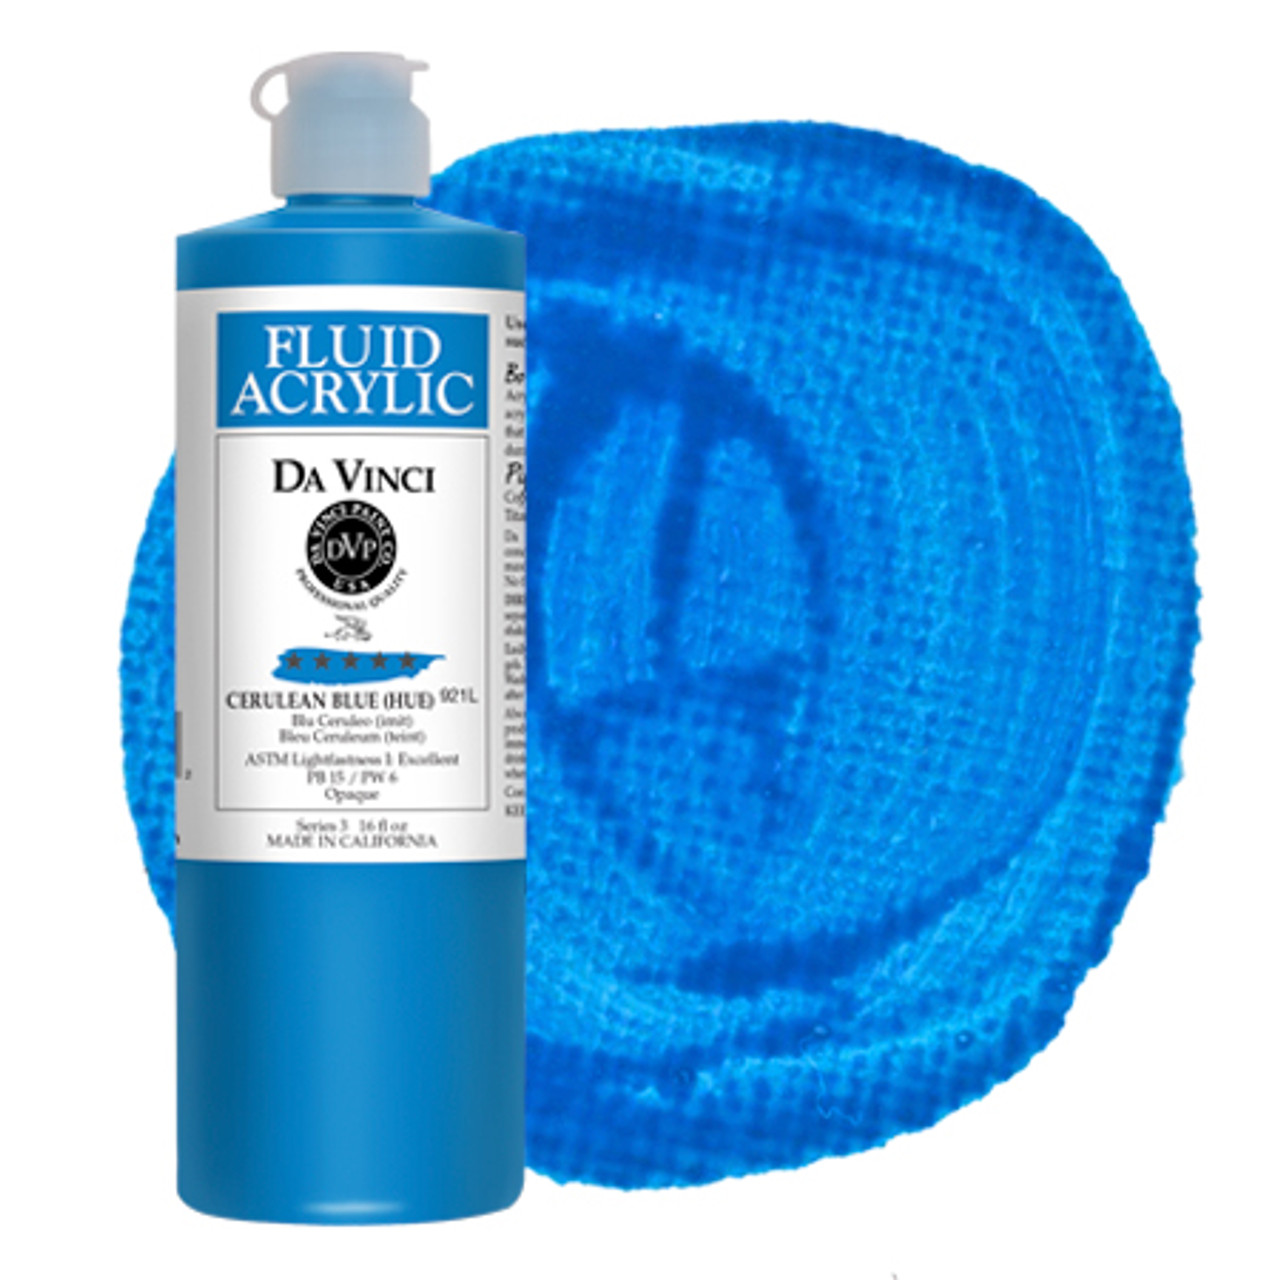 Da Vinci Cerulean Blue Hue Artist Fluid Acrylic Paint – 16oz